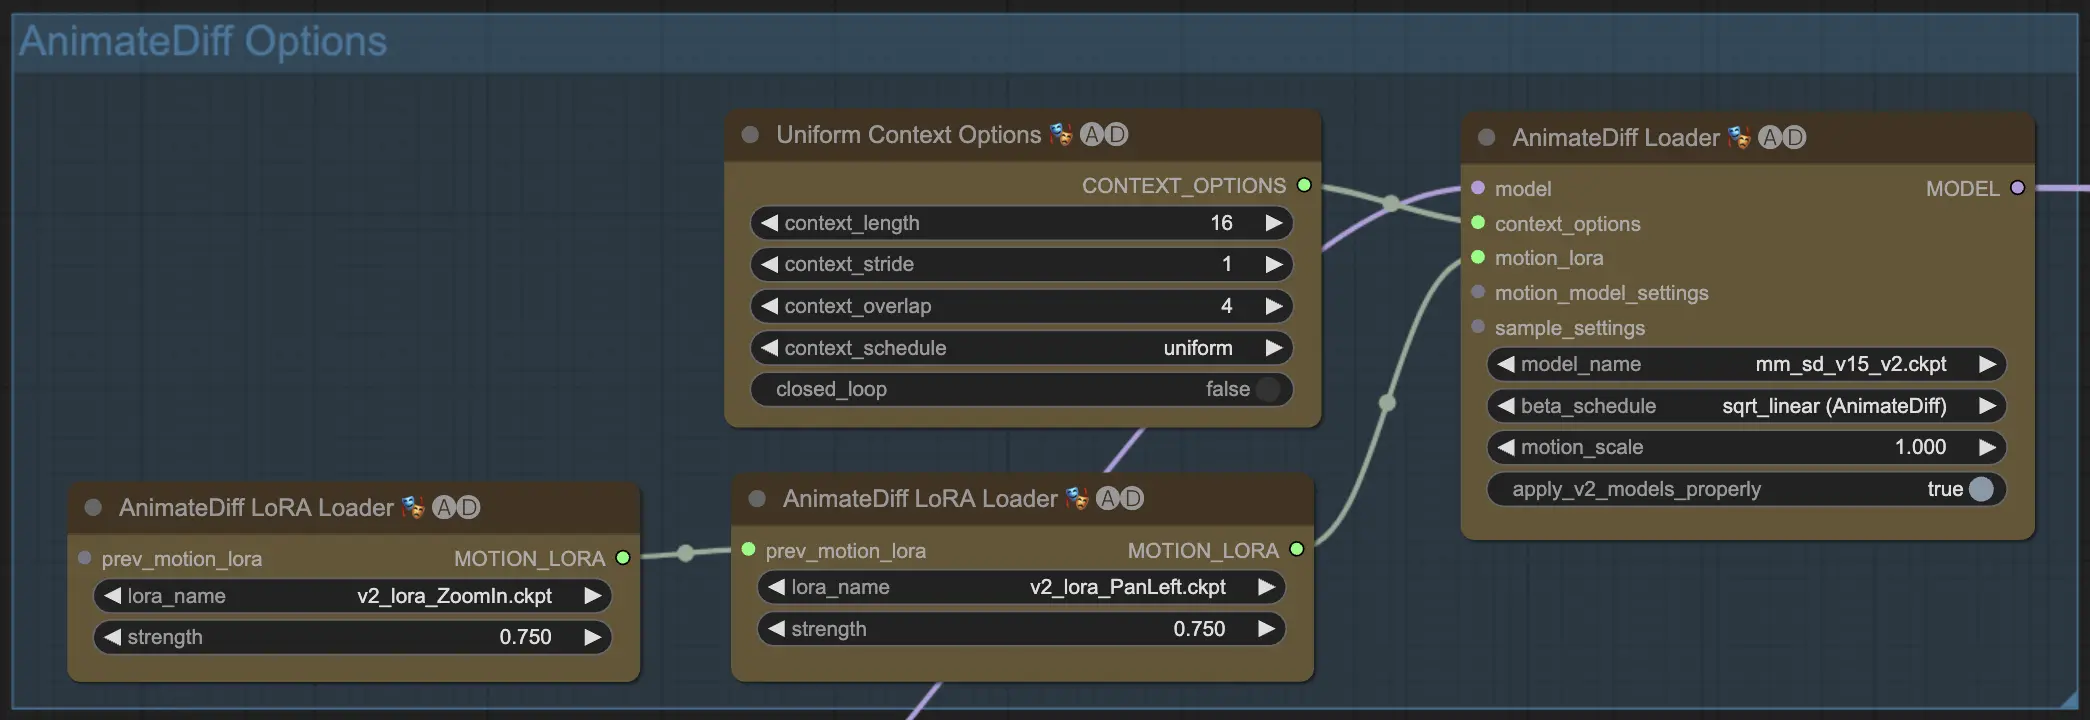 AnimateDiff Loader Nodes, MotionLoRA, and Uniform Context Settings in ComfyUI